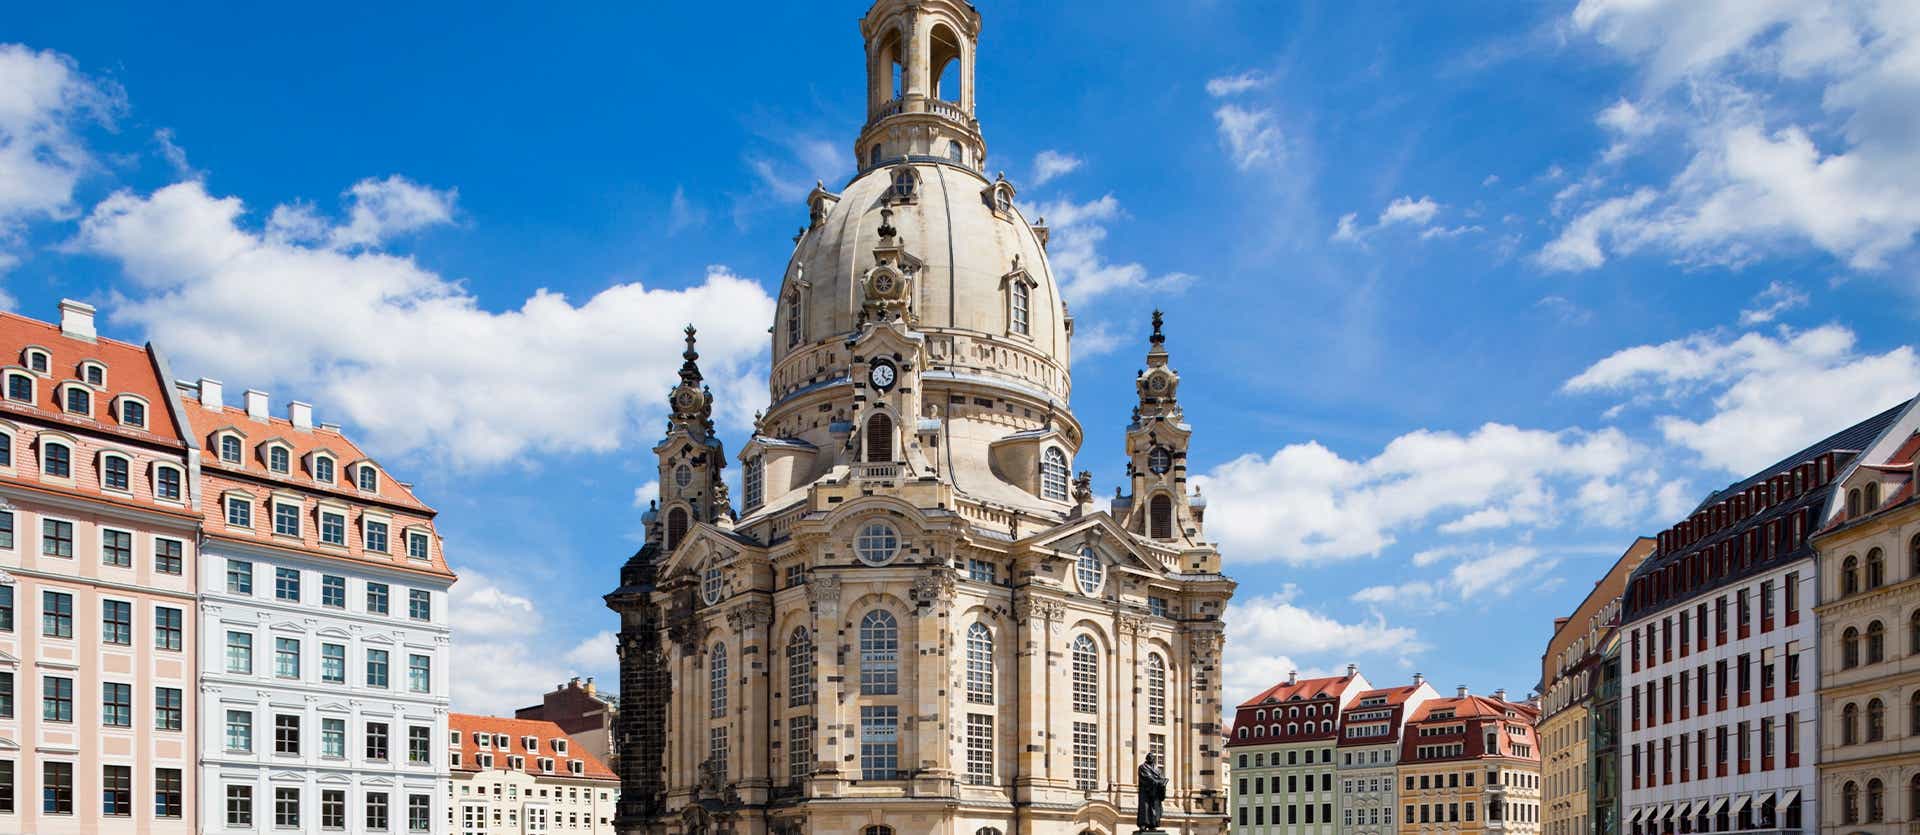 Iglesia de Nuestra Señora <span class="iconos separador"></span> Dresde